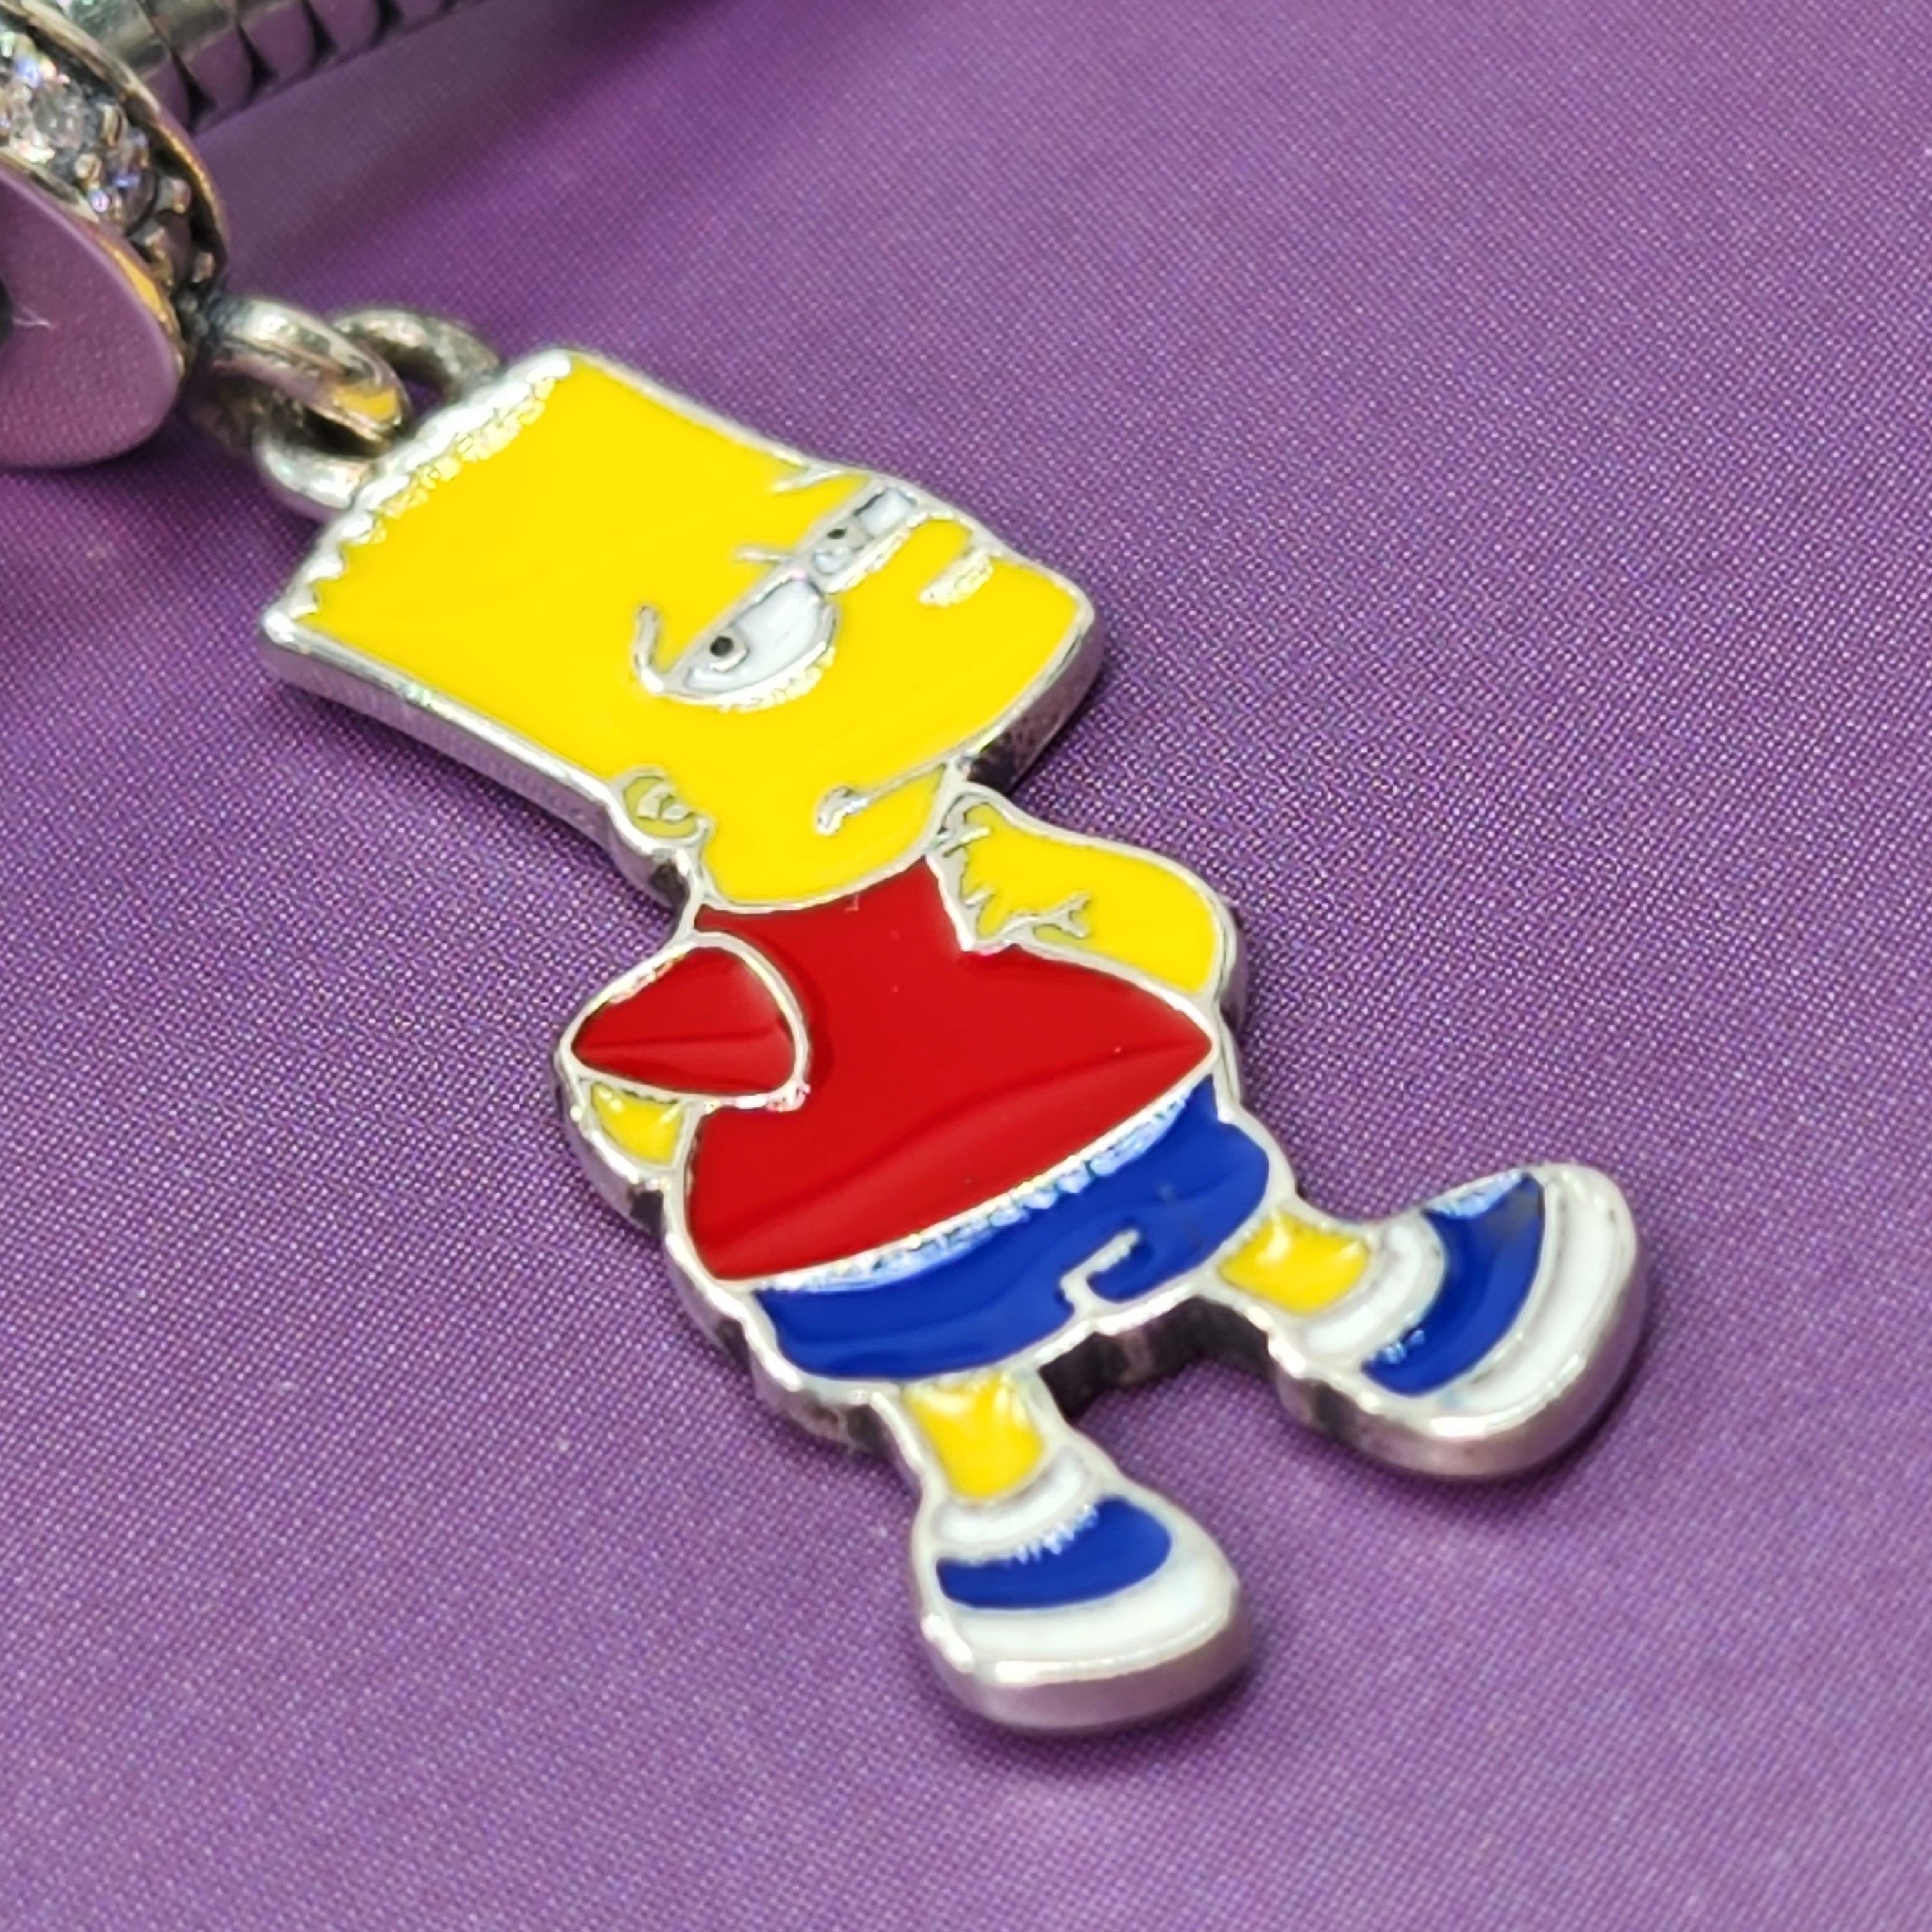 Who else is a fan of Barty the Bart mascot? : r/bayarea